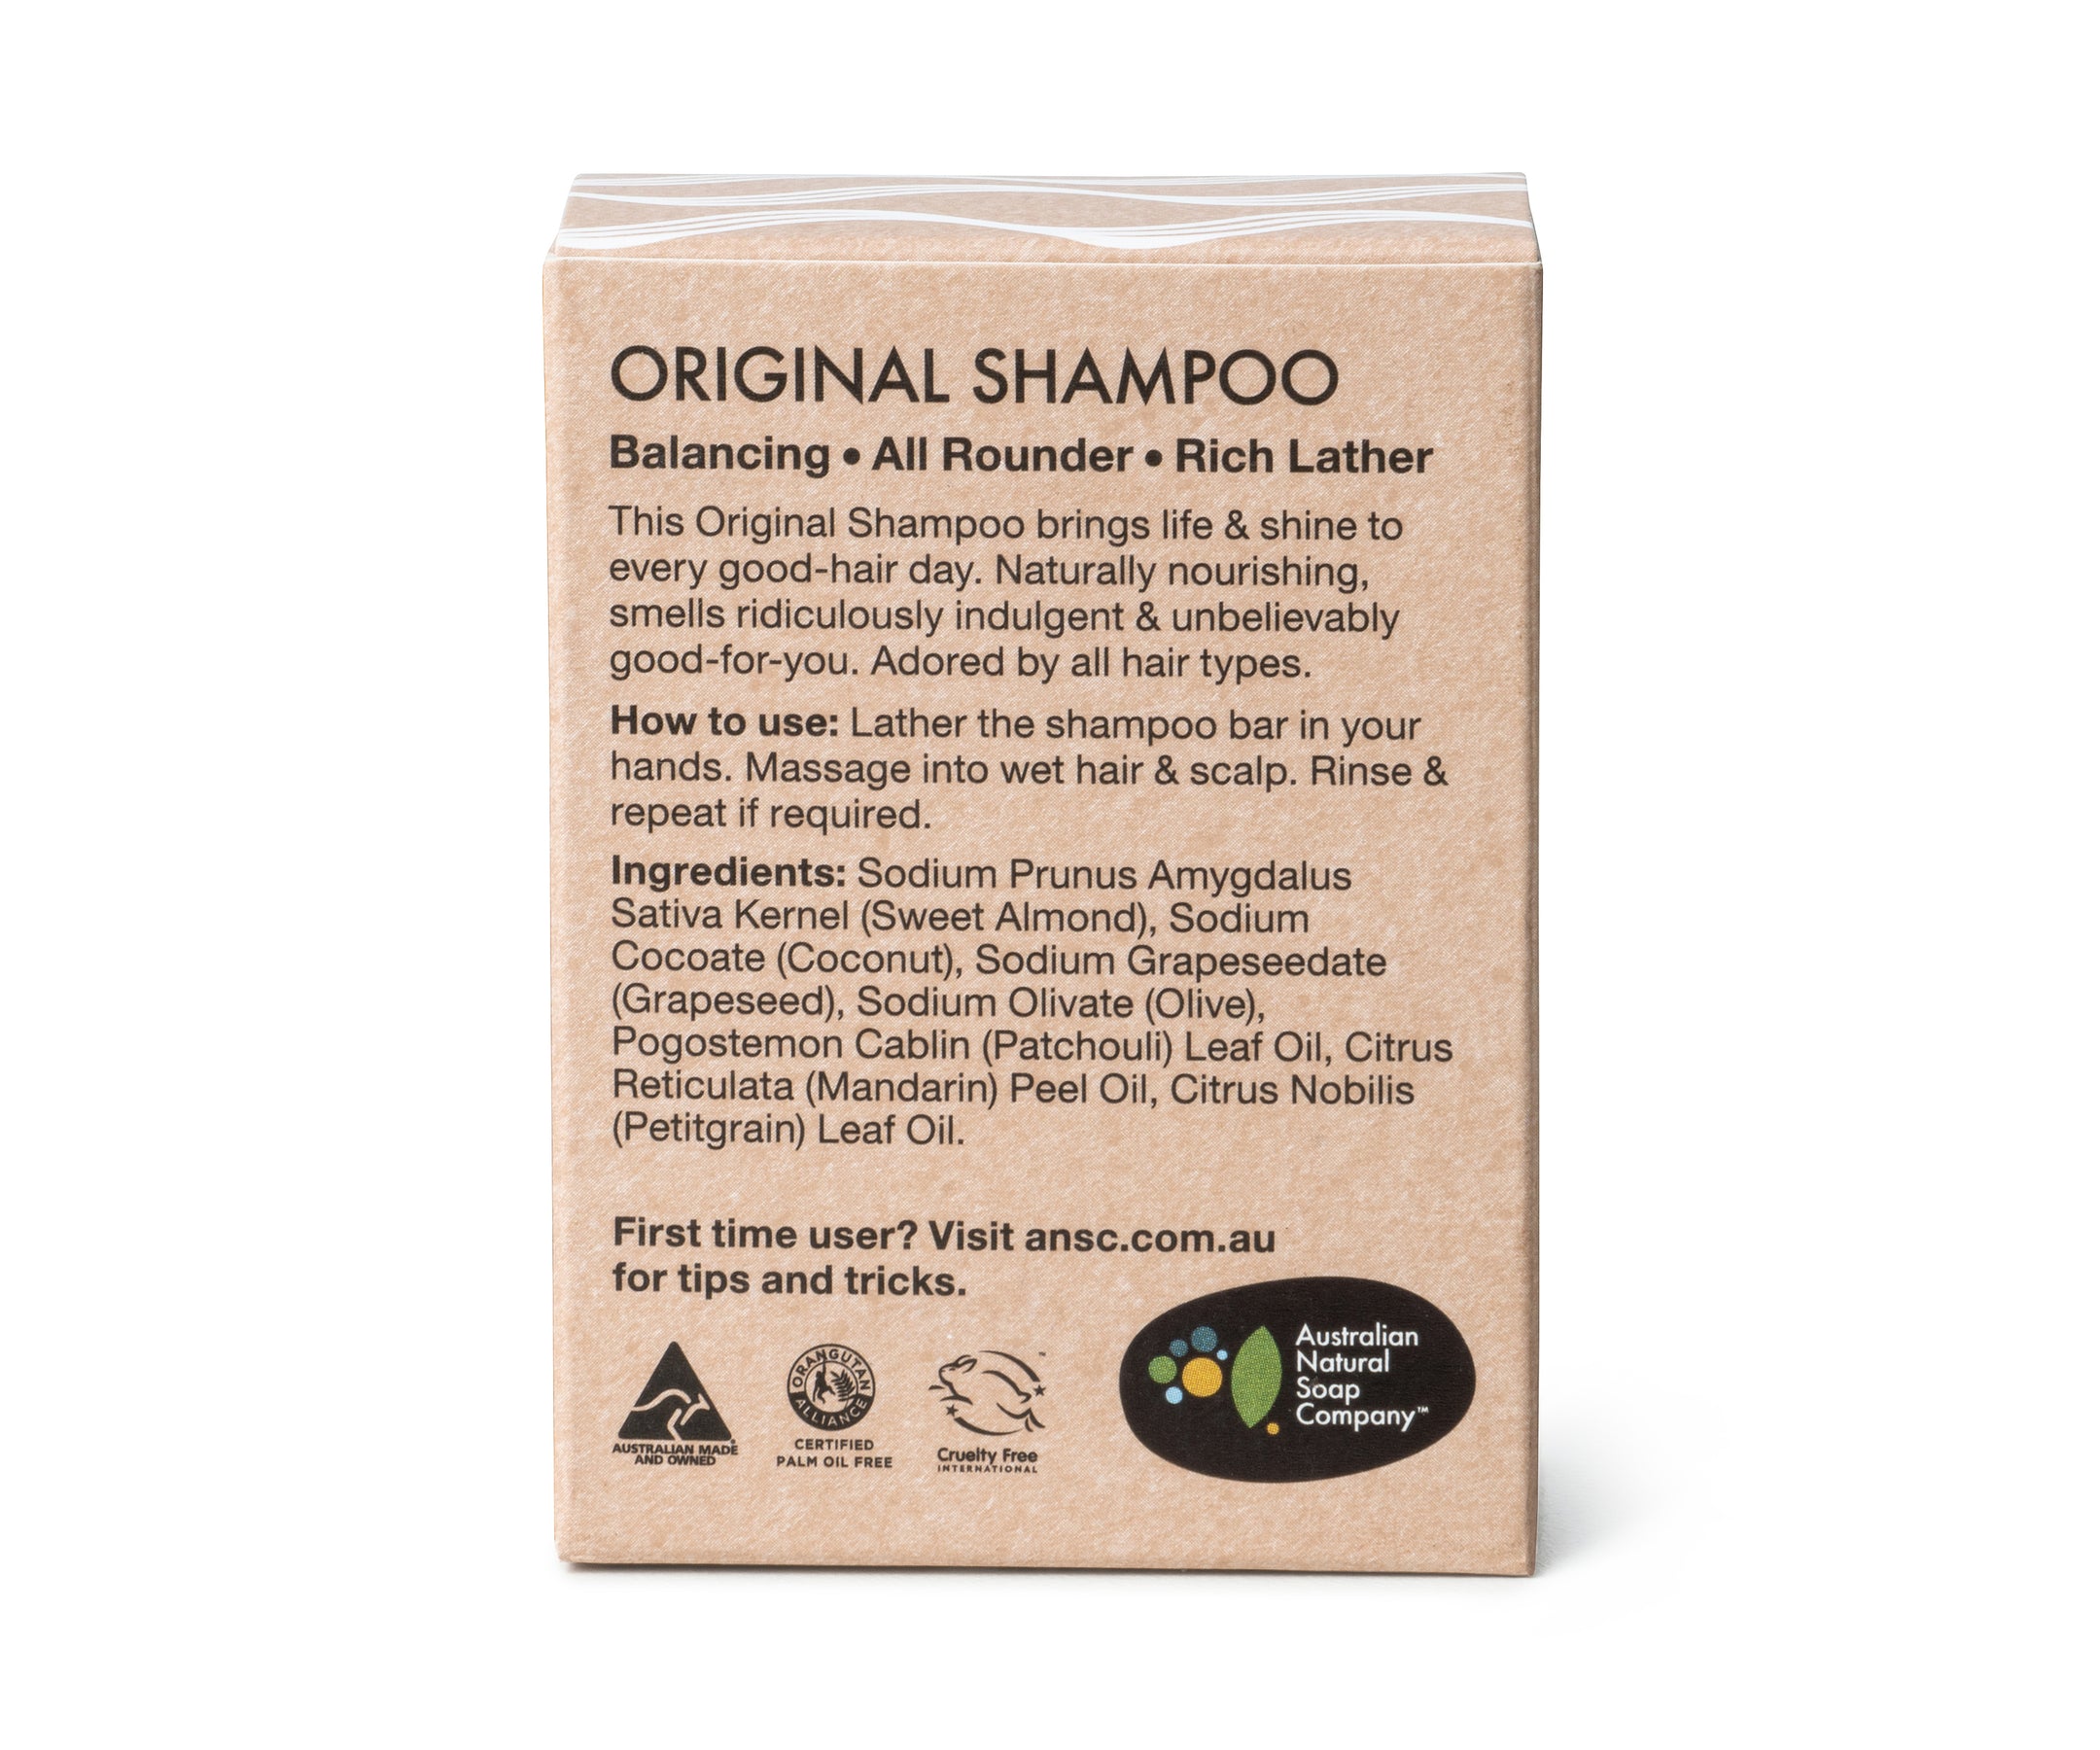 Australian Natural Soap Company handcrafted original shampoo bar back of box